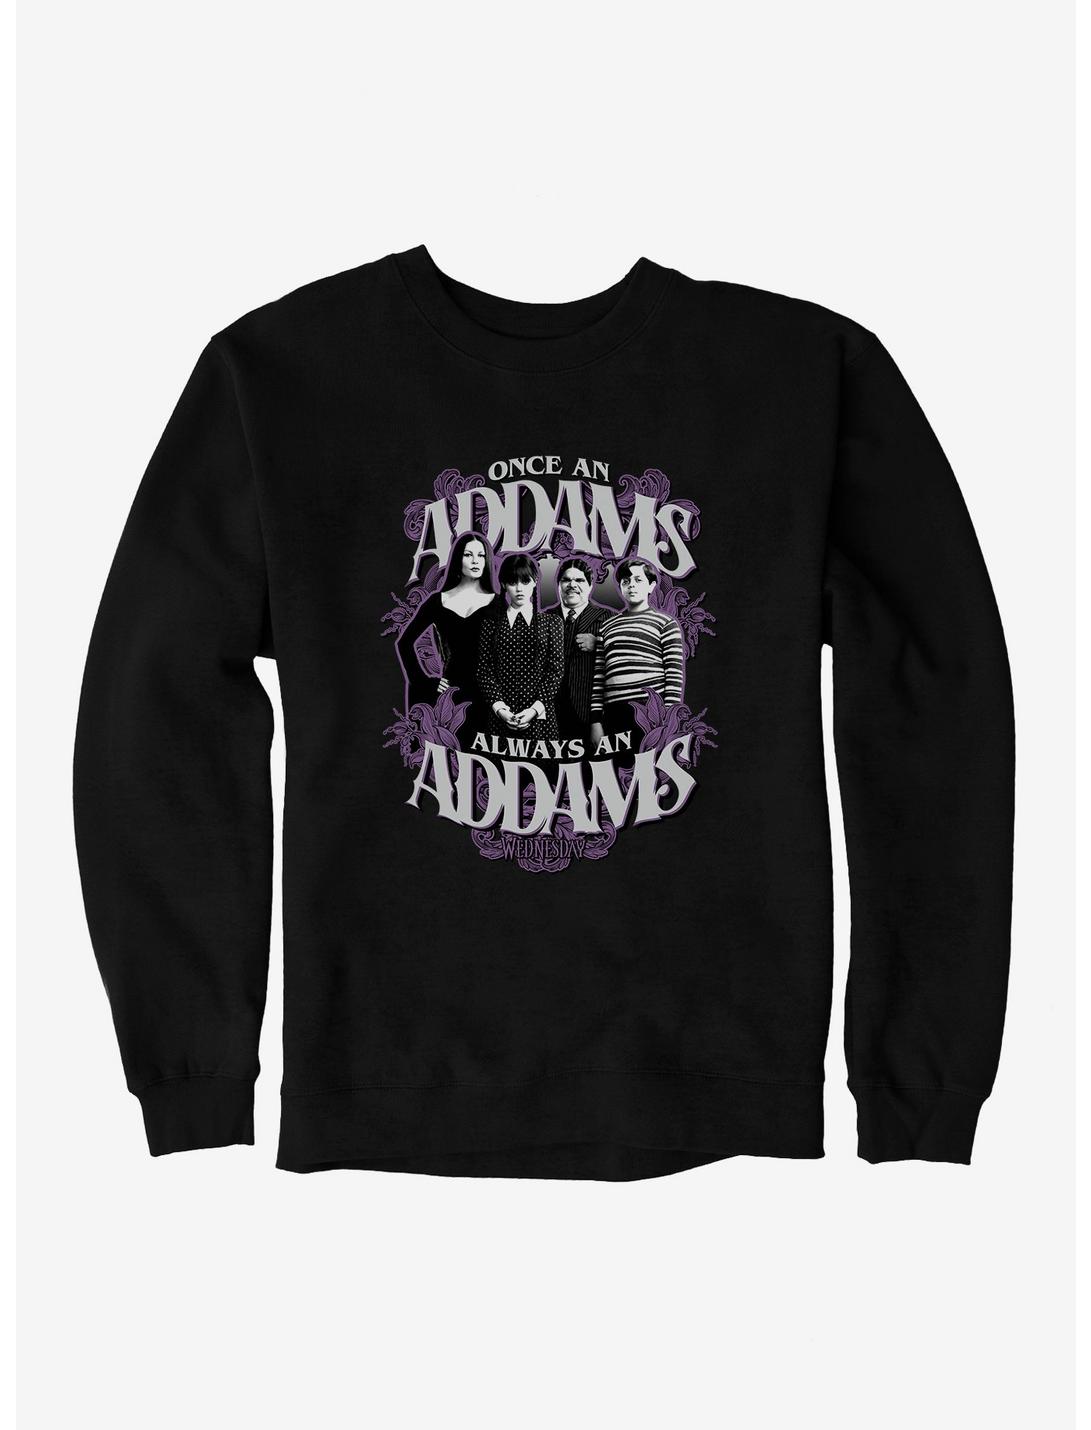 Wednesday Always An Addams Sweatshirt, BLACK, hi-res